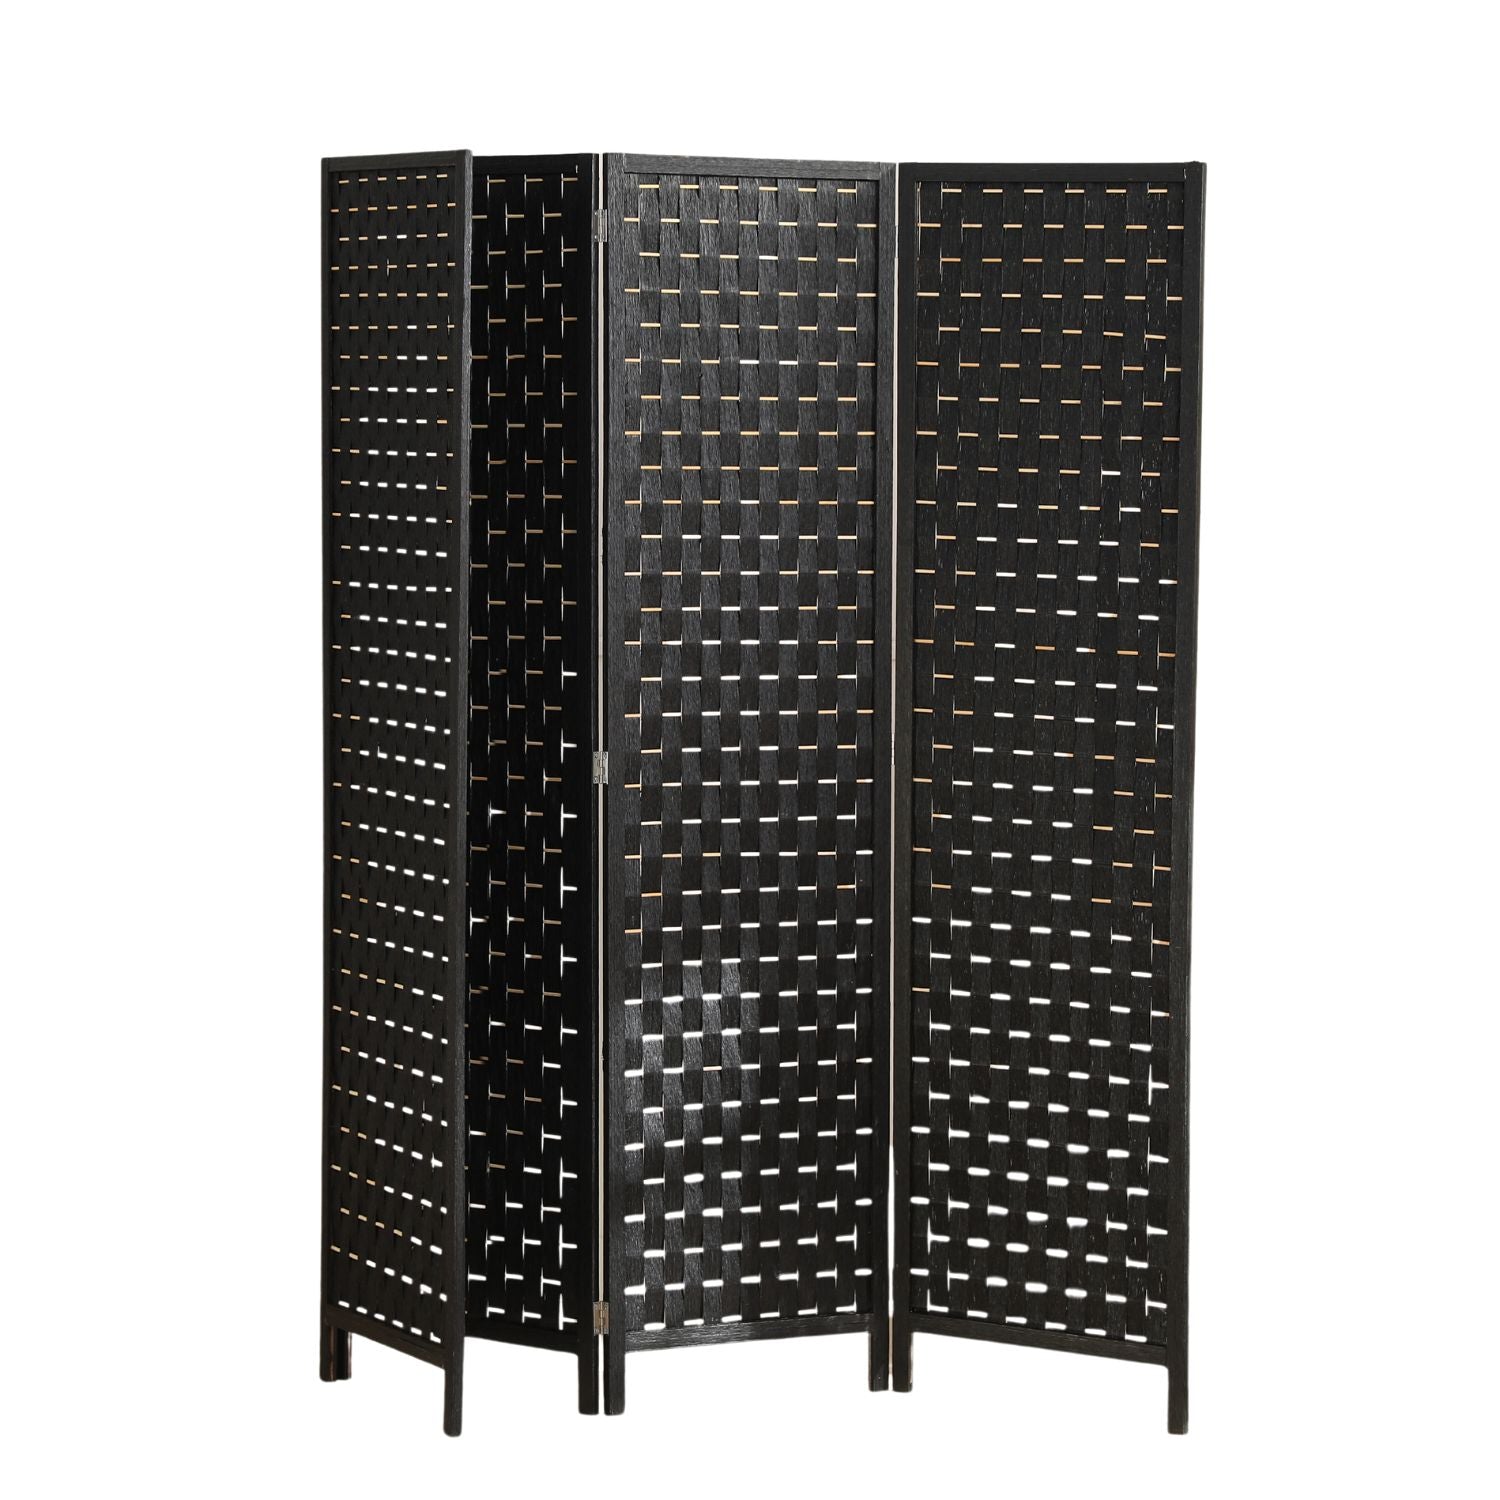 EKKIO 4-Panel Pine Wood Room Divider - Black | Functional and Decorative (EK-RD-100-SD)